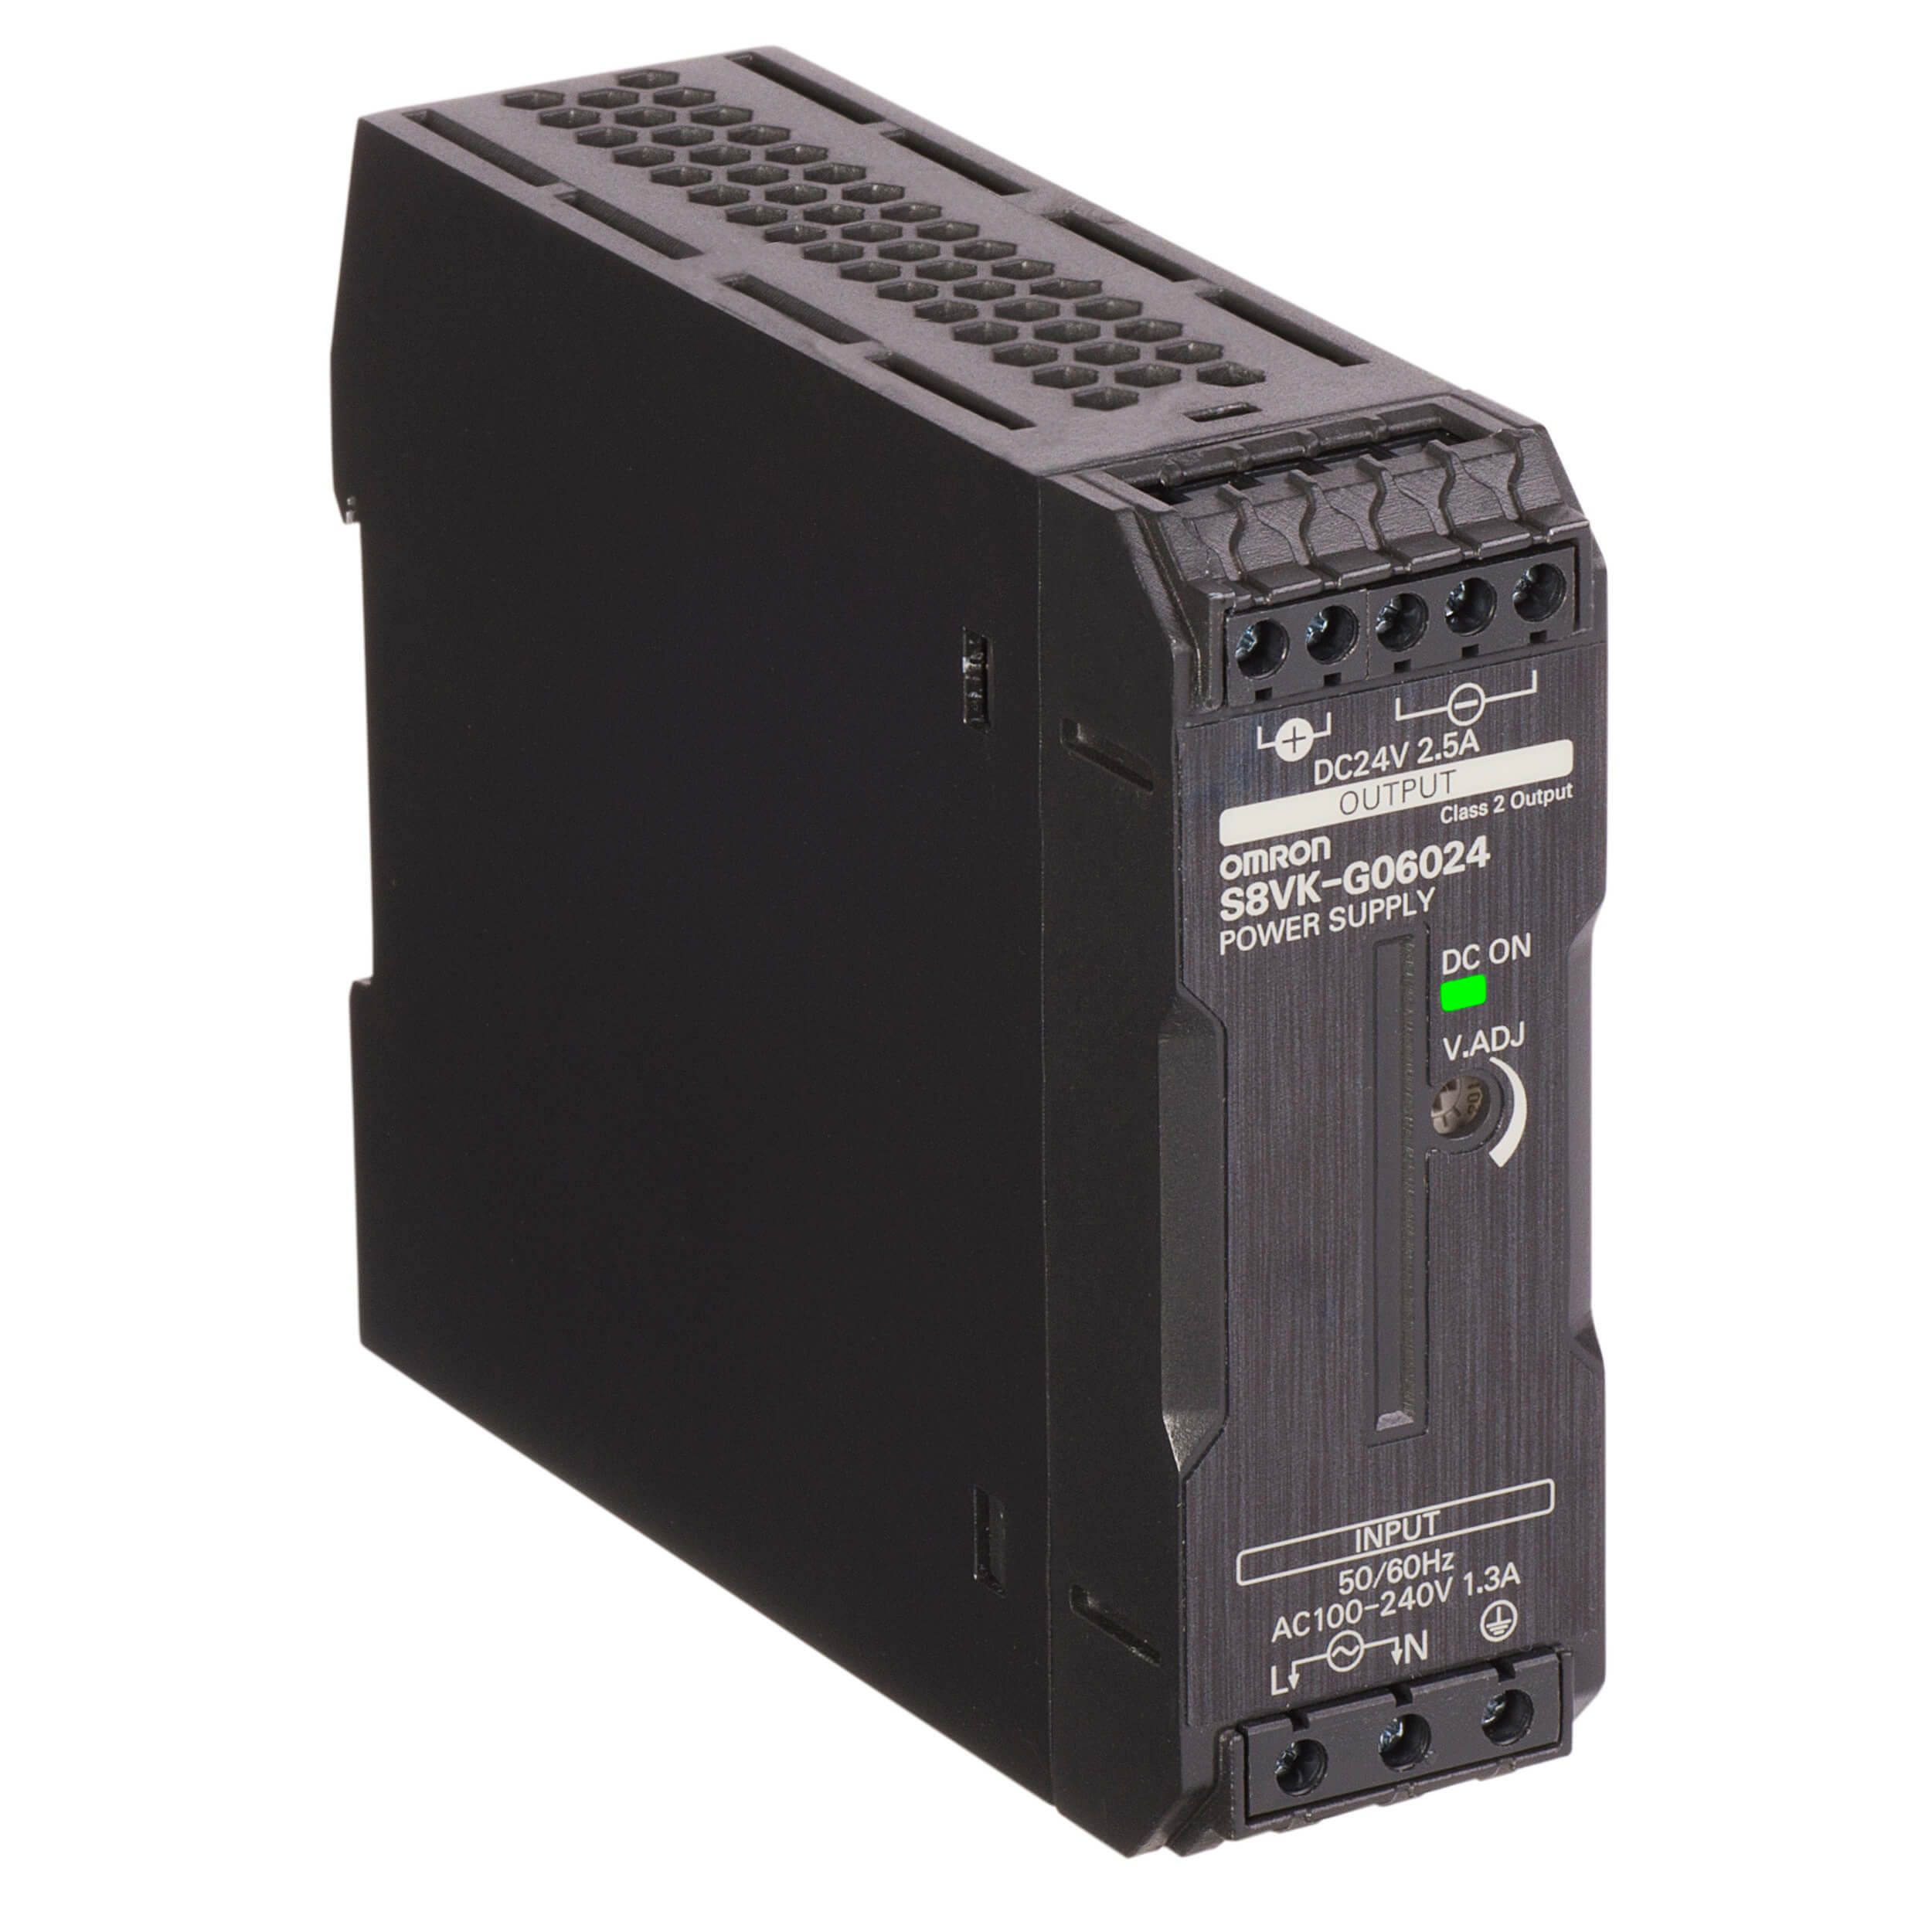 Omron S8vk-G06024 Dc Power Supply,24Vdc,2.5A,50/60Hz